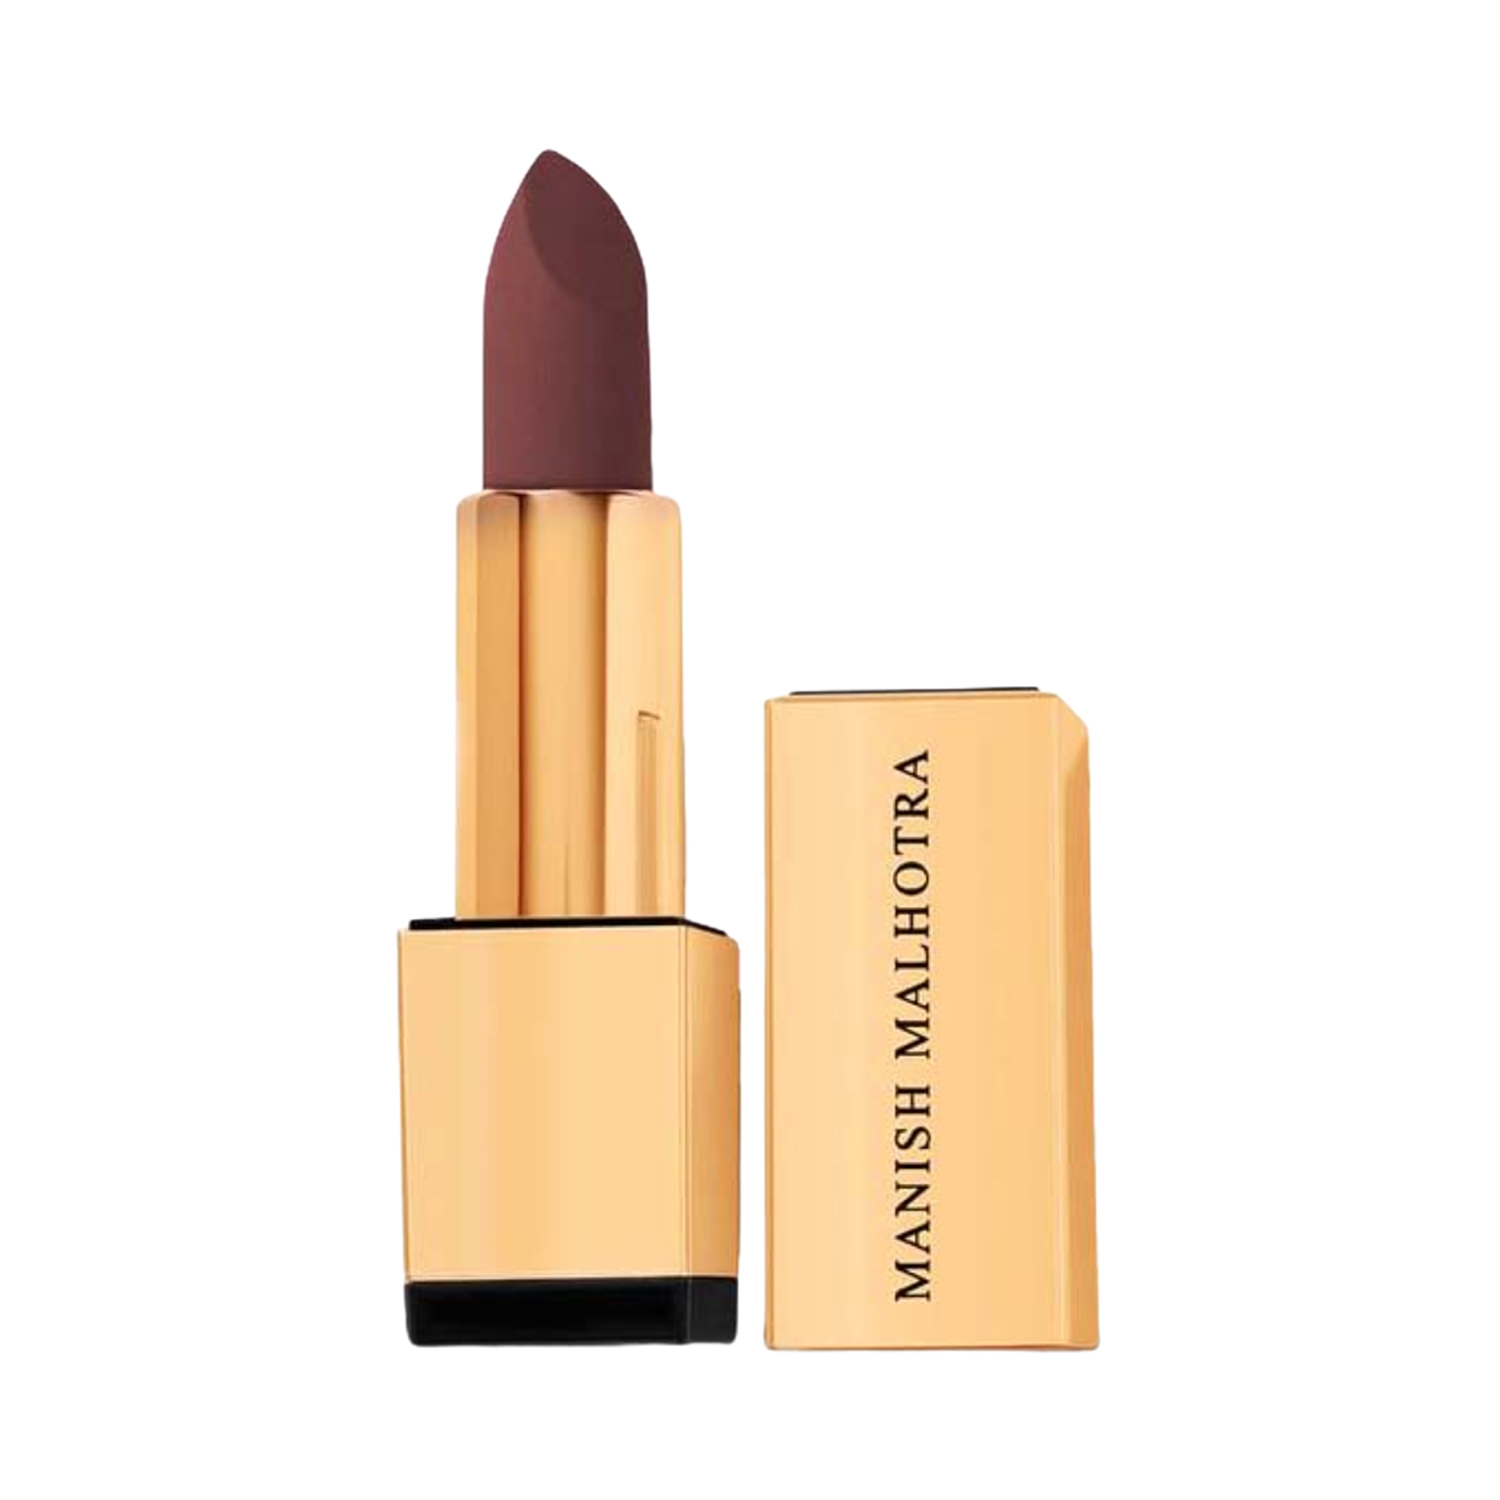 MyGlamm | MyGlamm Manish Malhotra Beauty Powder Matte Lipstick - Cocoa Addition (4g)